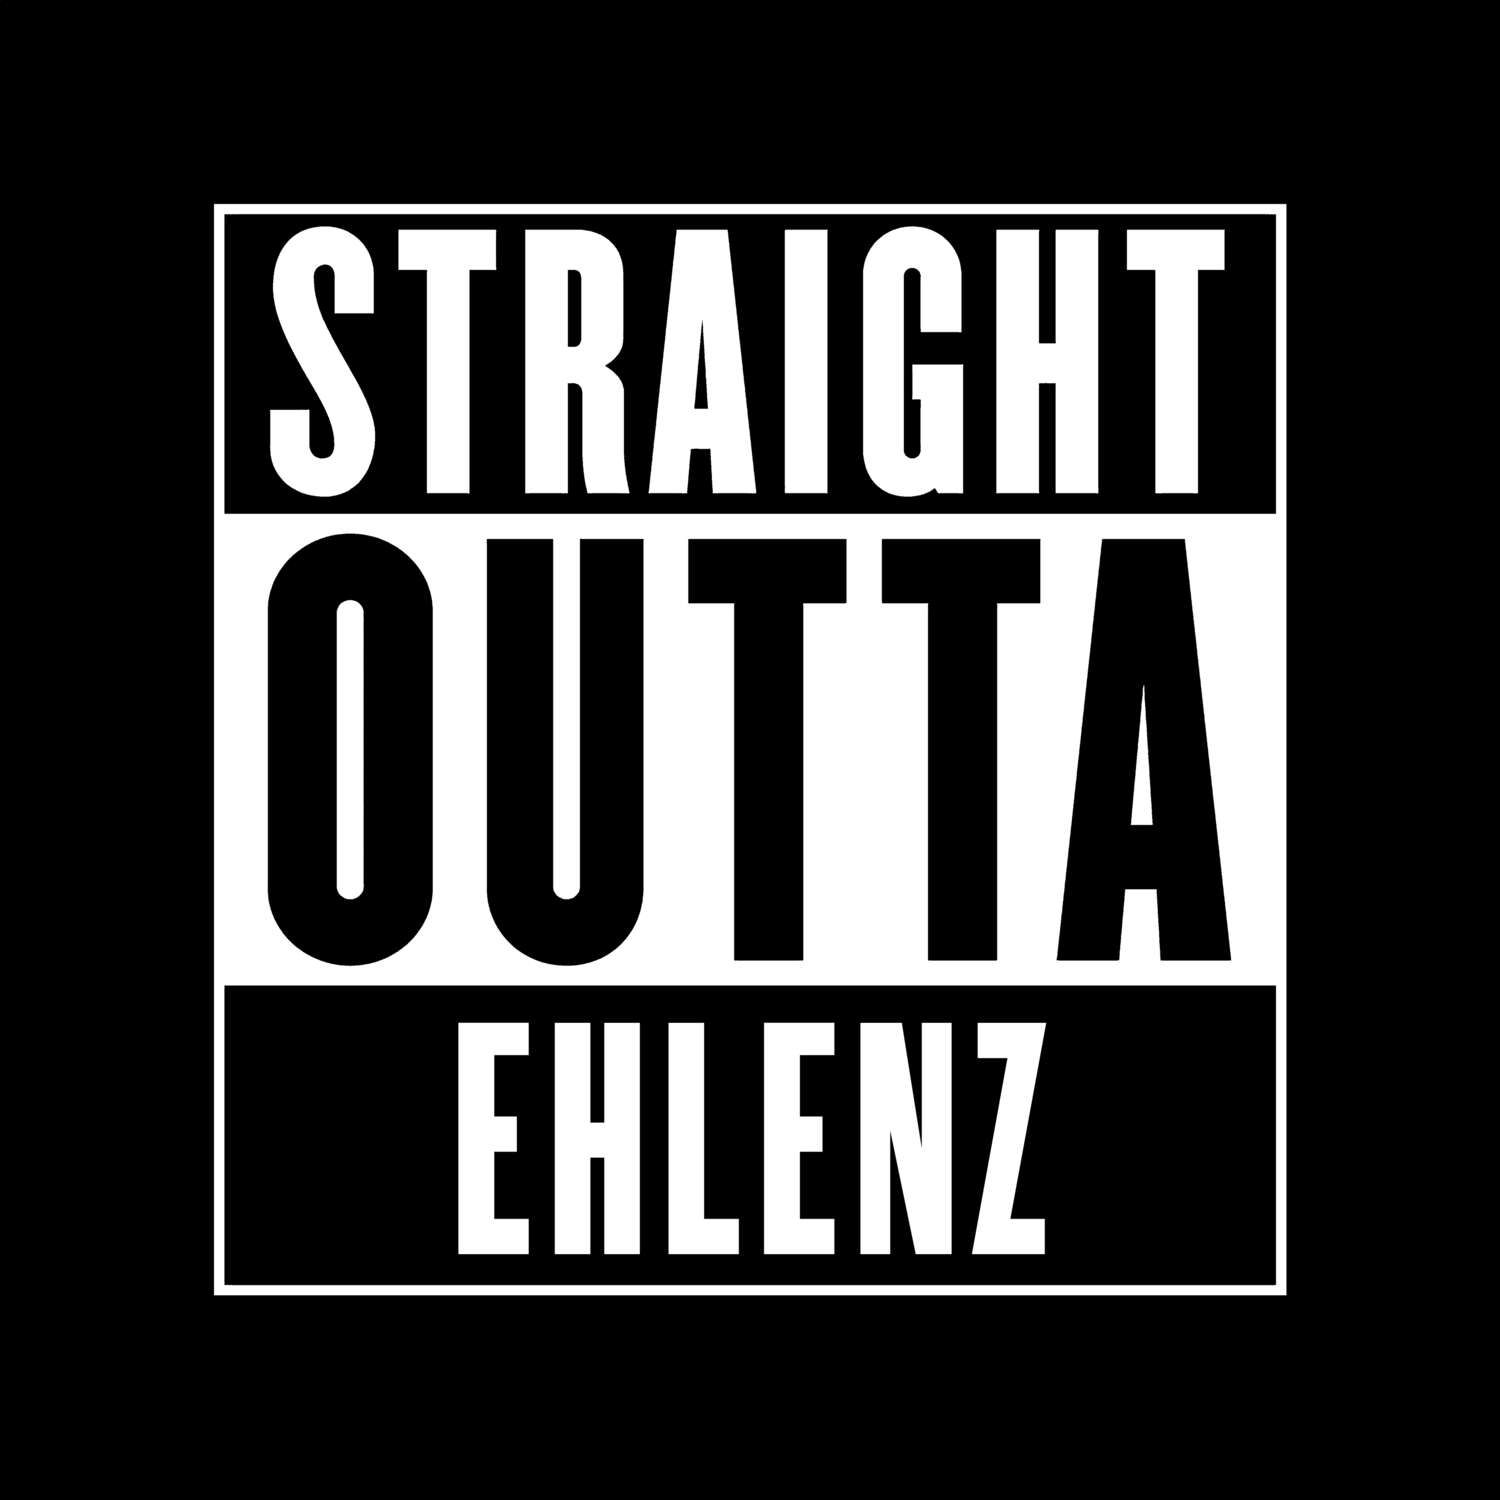 Ehlenz T-Shirt »Straight Outta«